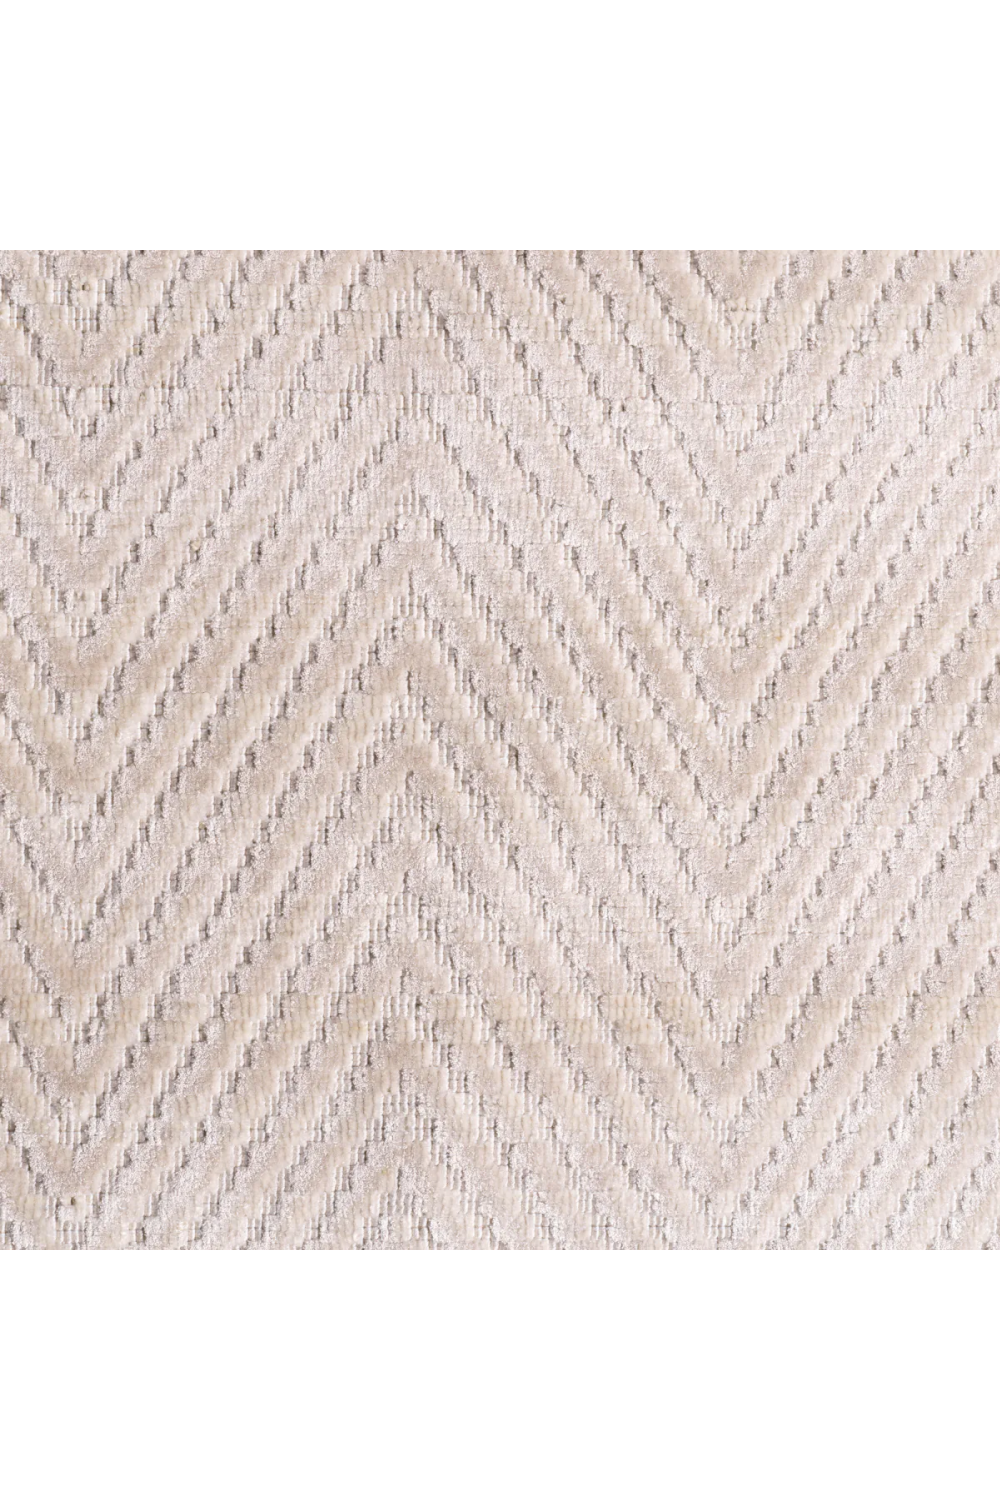 Off-White Carpet 6' x 8' | Eichholtz Herringbone | Oroa.com